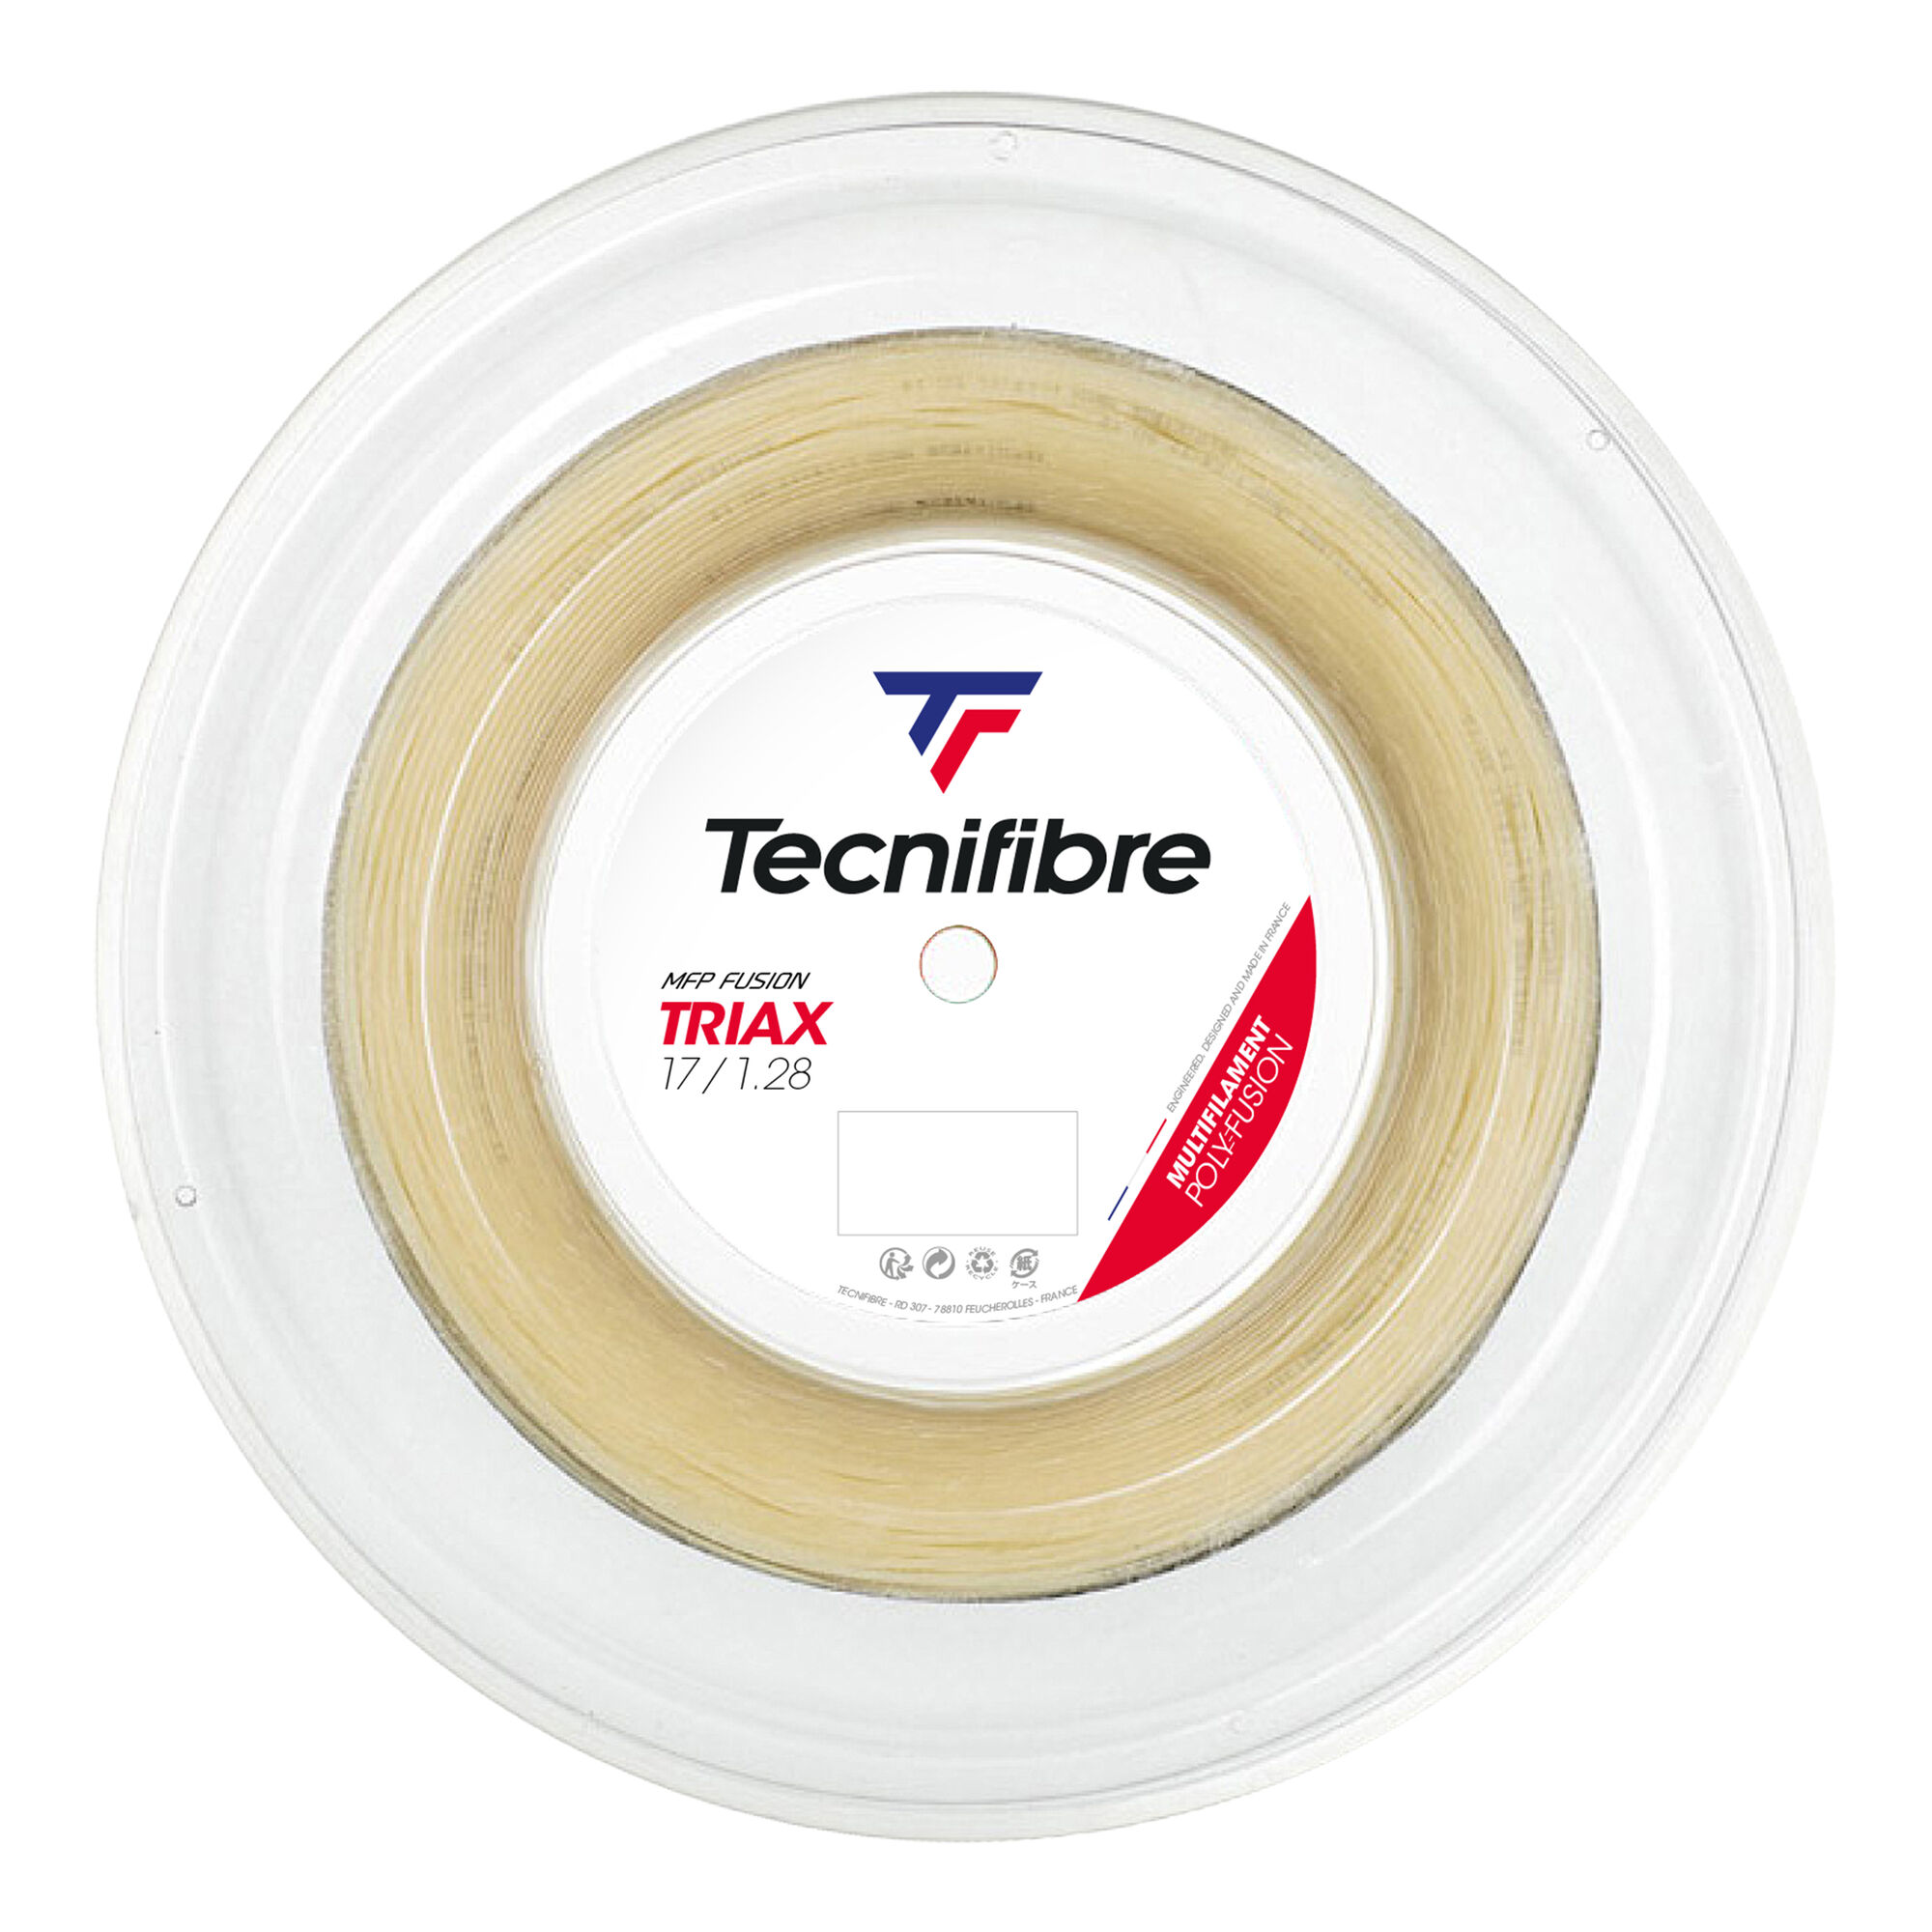 Buy Tecnifibre Triax String Reel 200m Ecru online